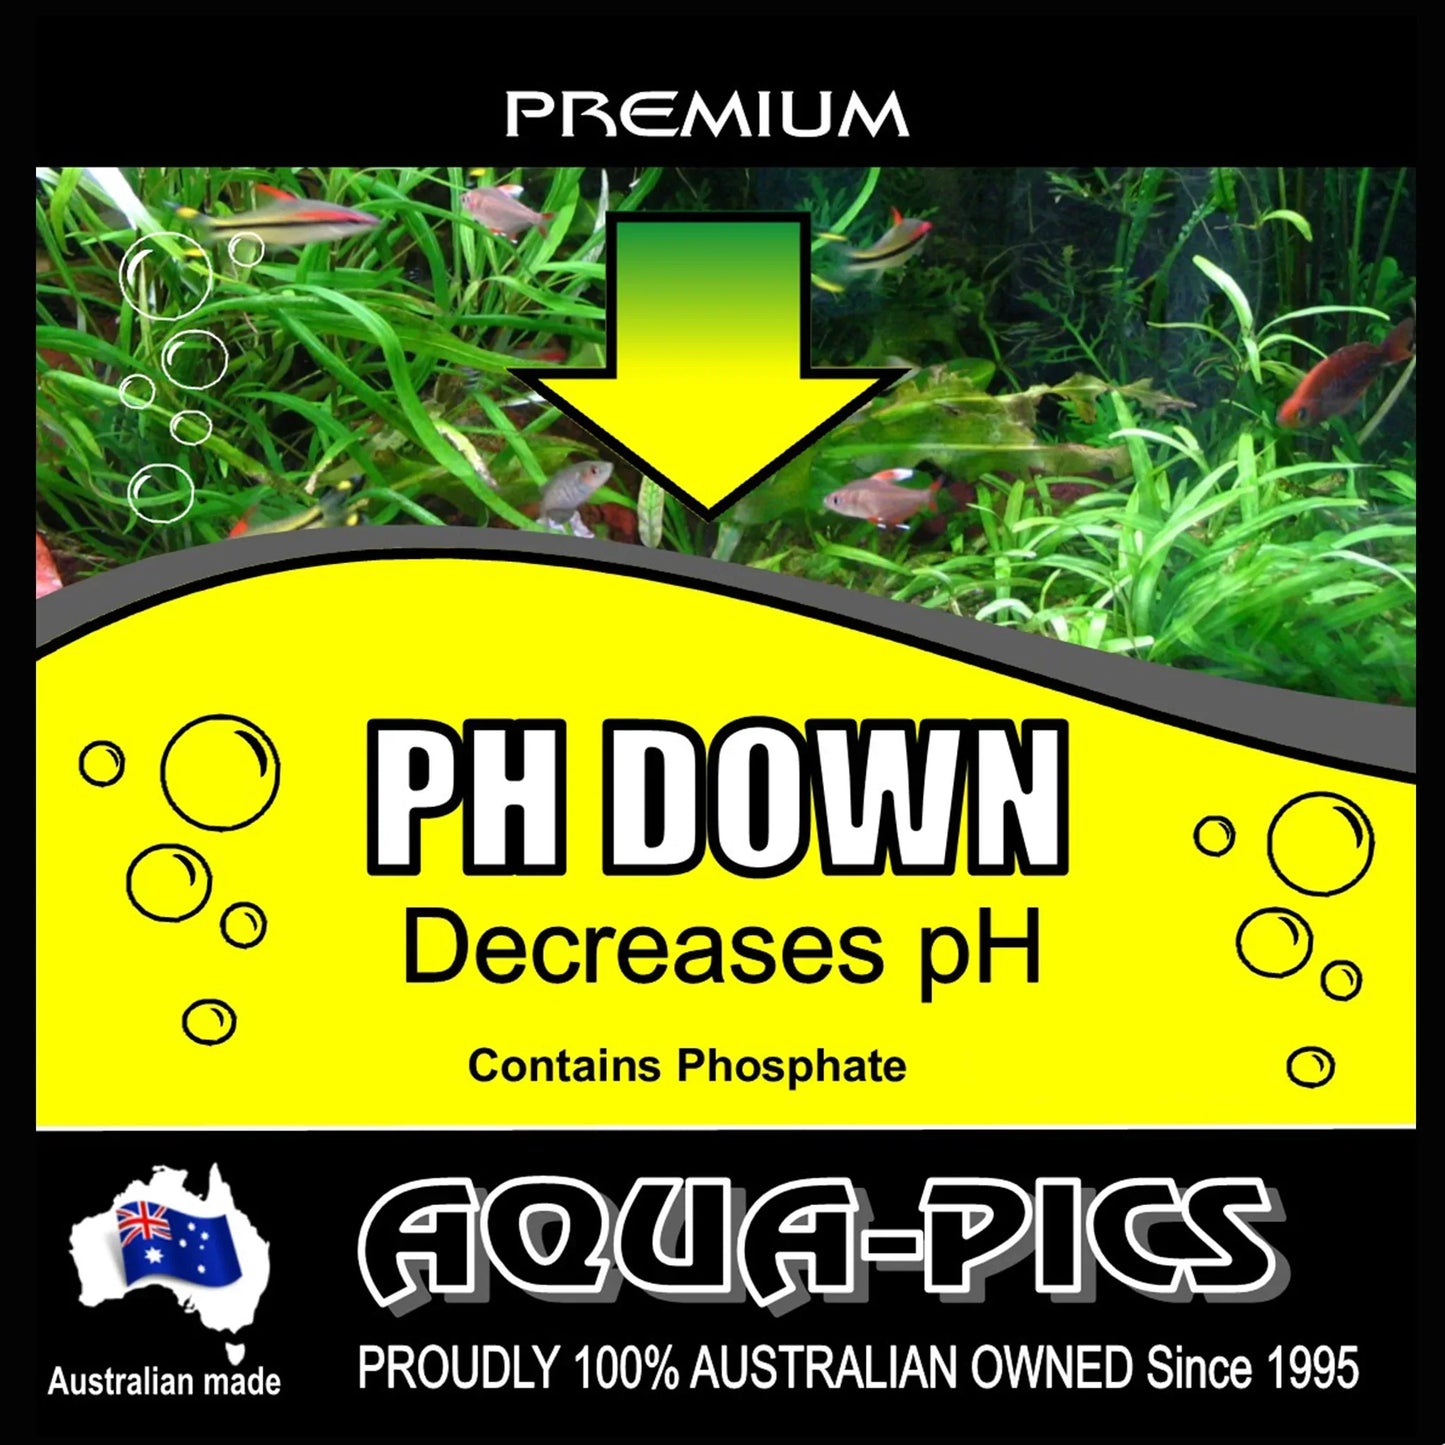 pH Down Powder 100g